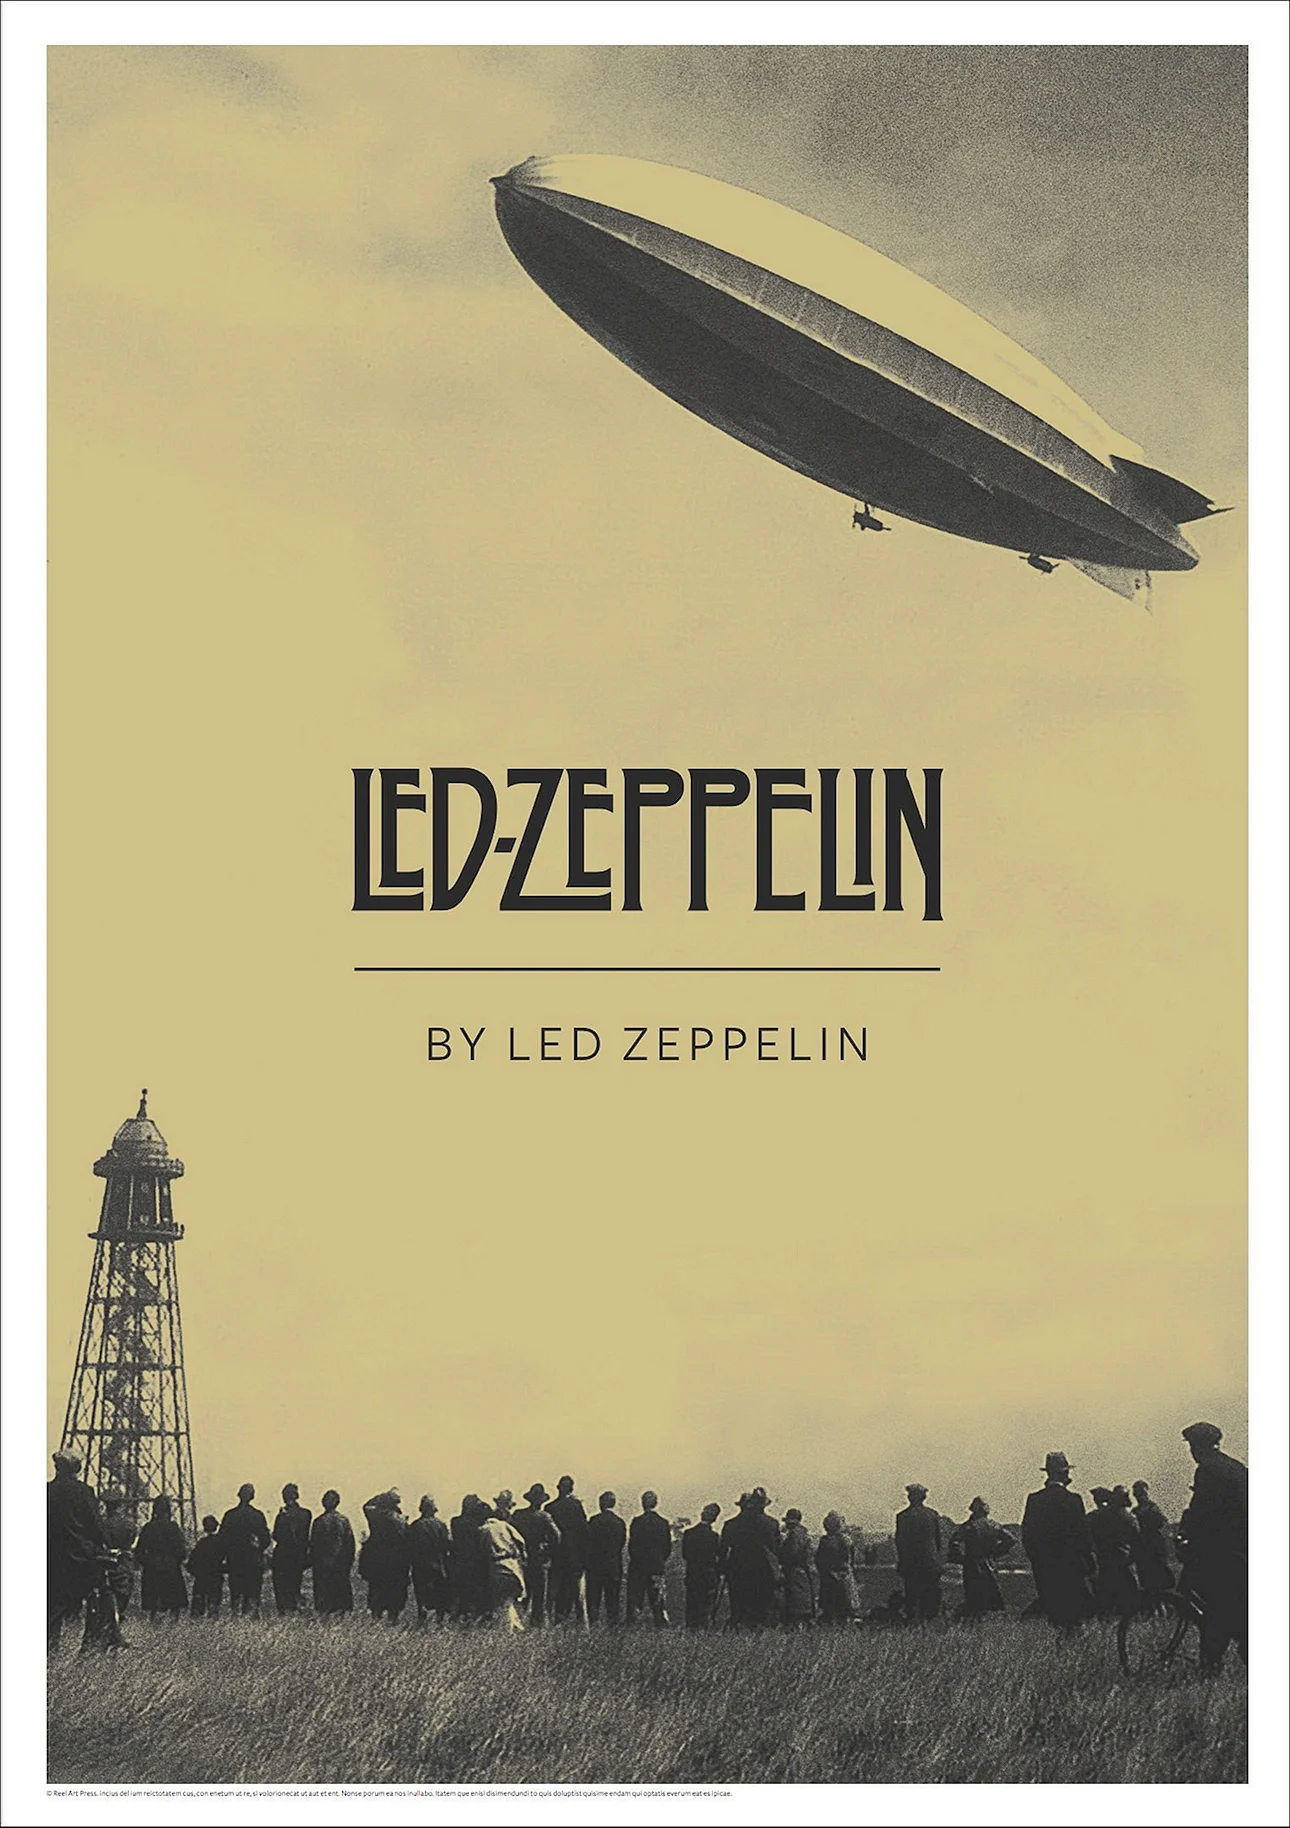 Led Zeppelin Poster Wallpaper For iPhone